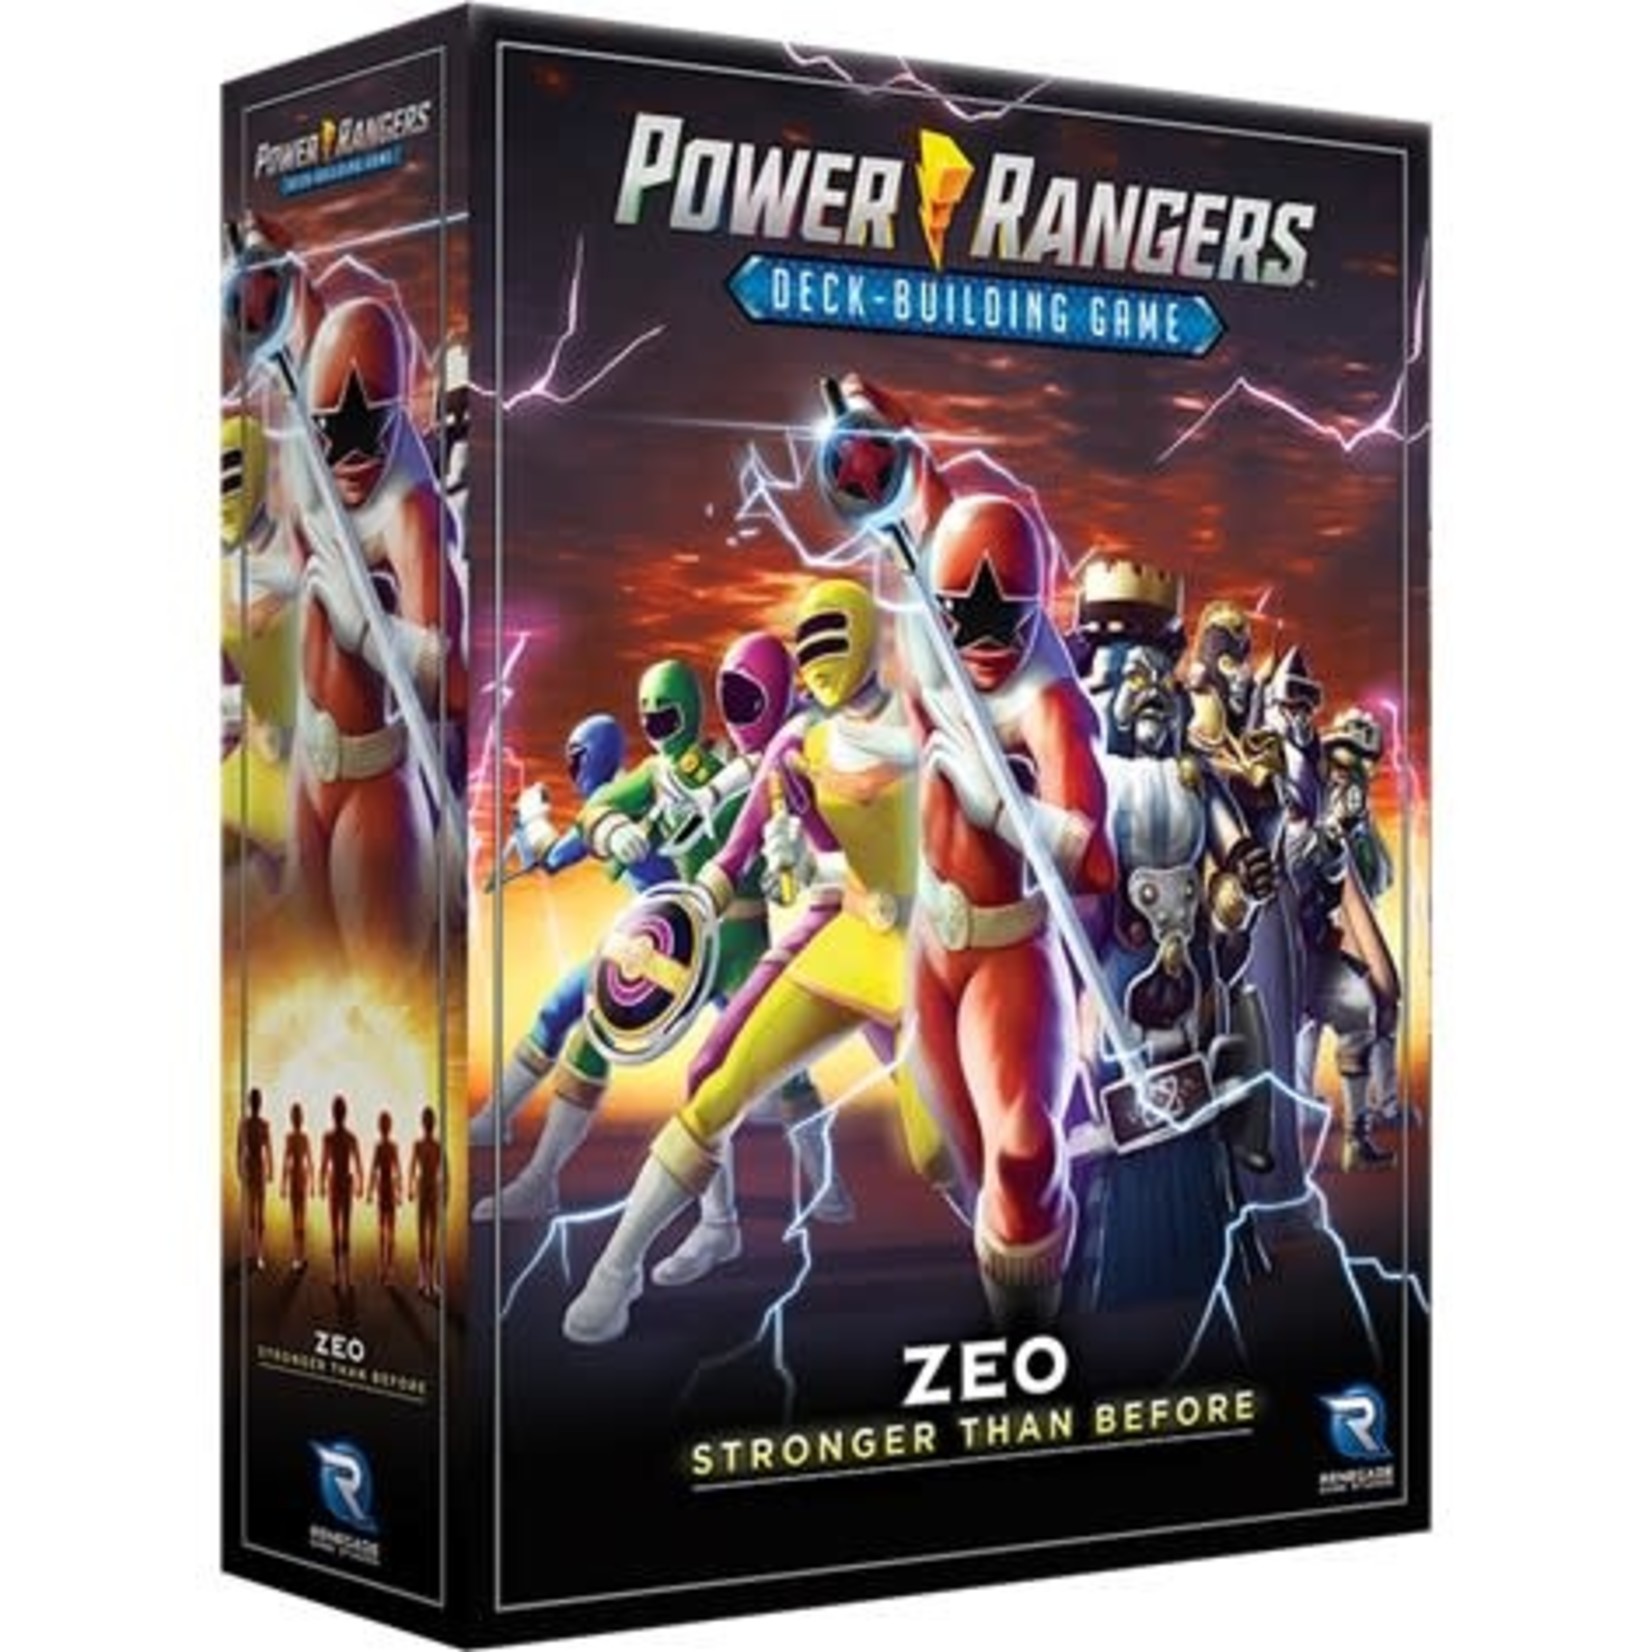 Renegade Power Rangers Deckbuilding Game: Zeo - Stronger Than Before